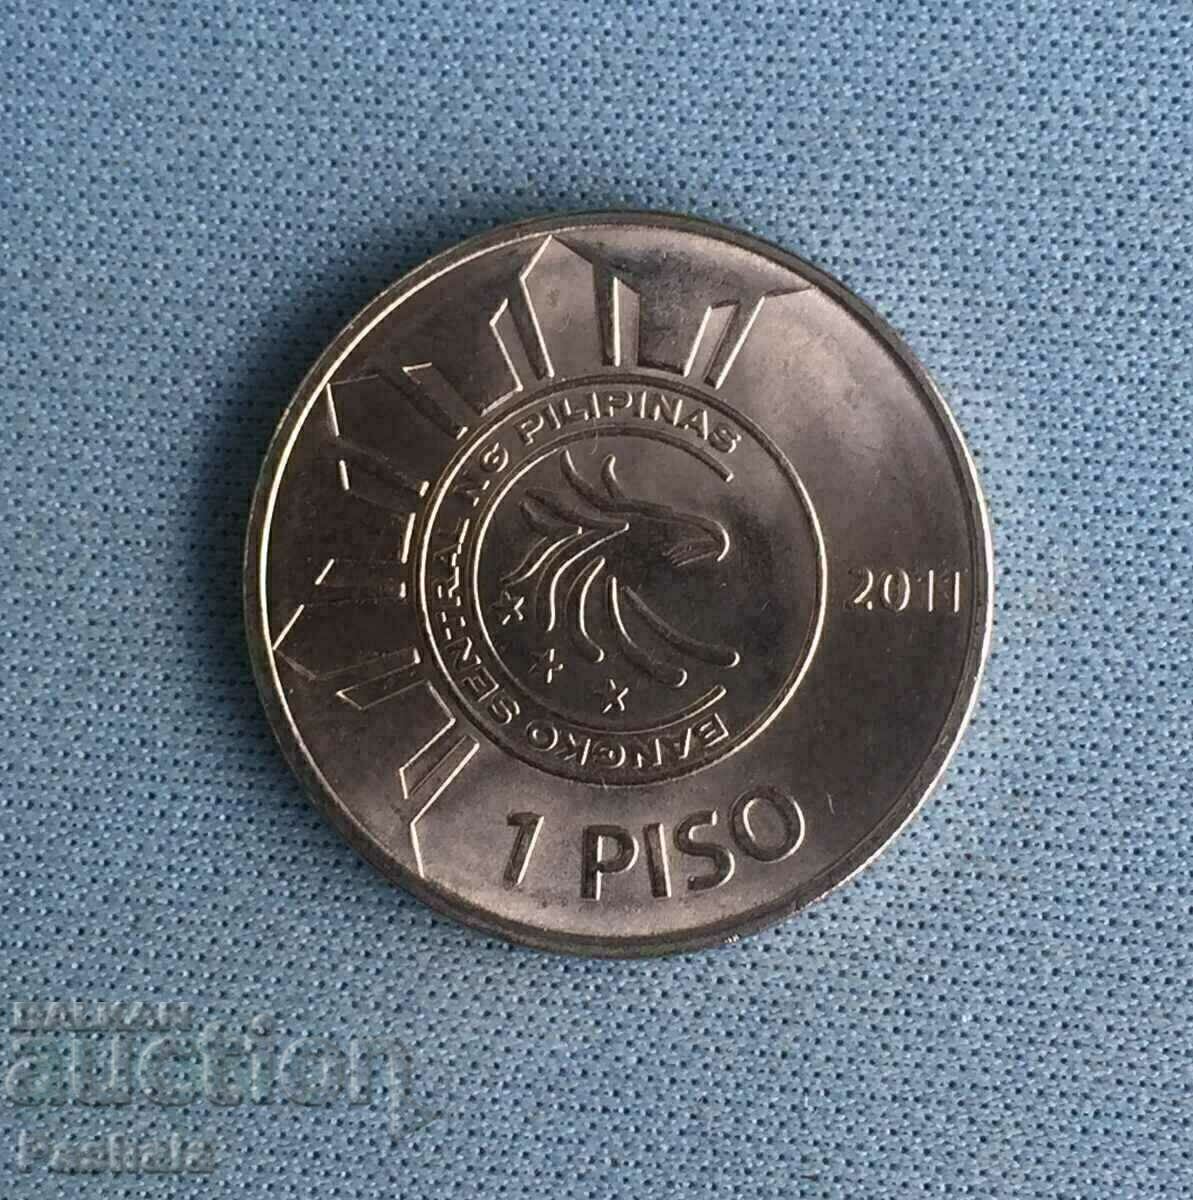 Filipine 1 peso 2011